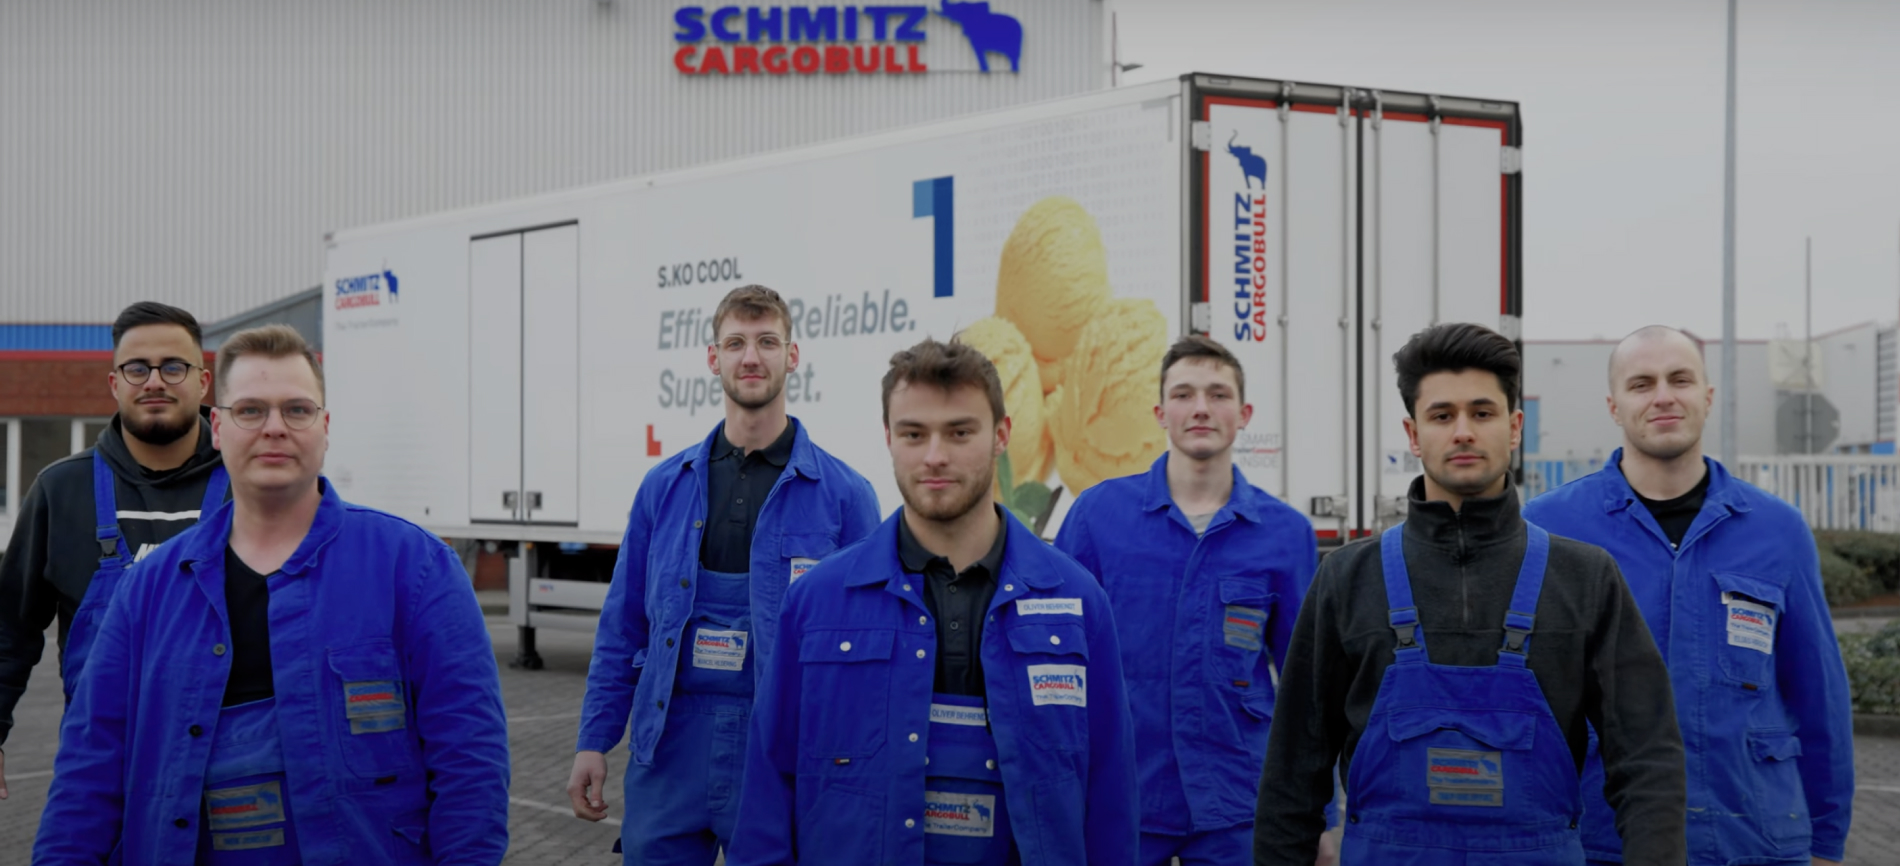 Technische Ausbildung & Duales Studium bei Schmitz Cargobull